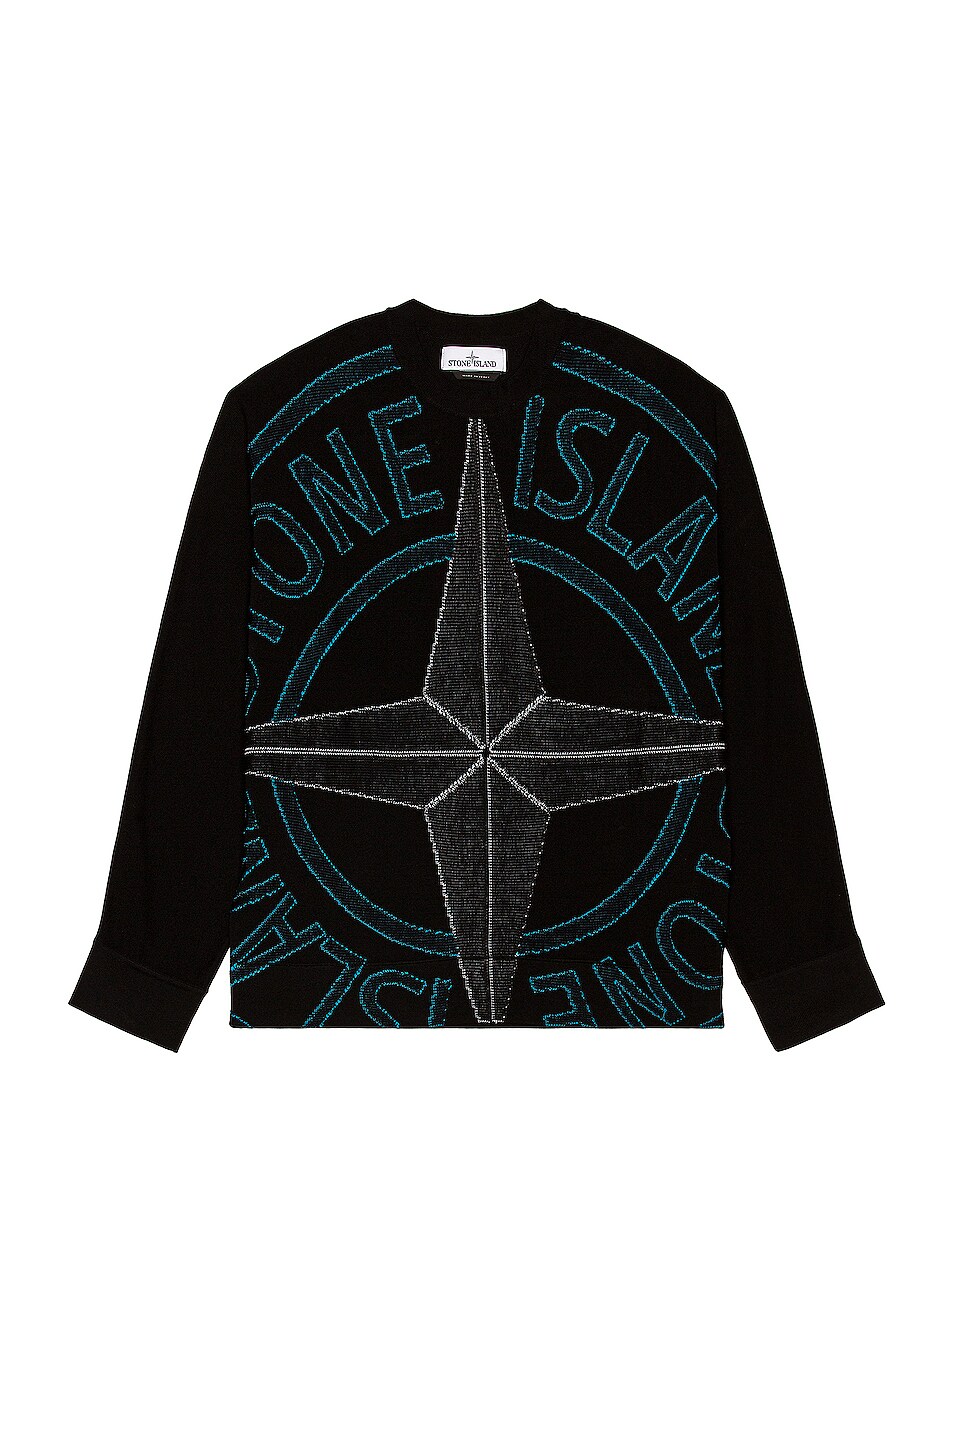 Image 1 of Stone Island Crewneck Knit Sweater in Black